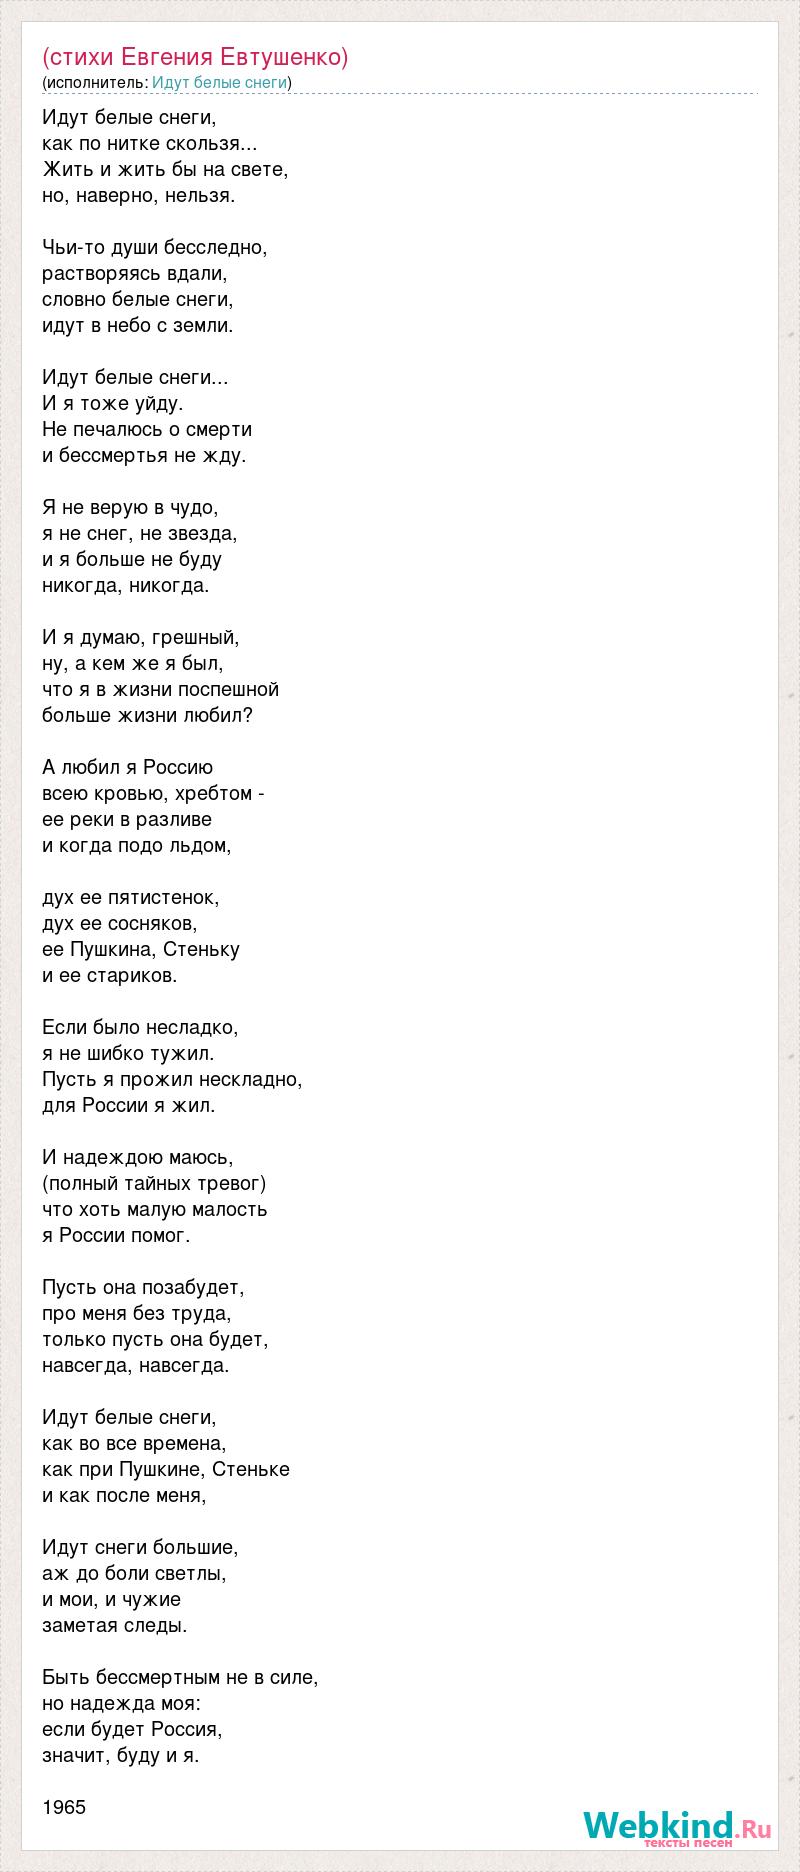 Текст по евтушенко егэ. Евтушенко идут белые снеги текст. Стихи Евтушенко идут белые снеги слова.